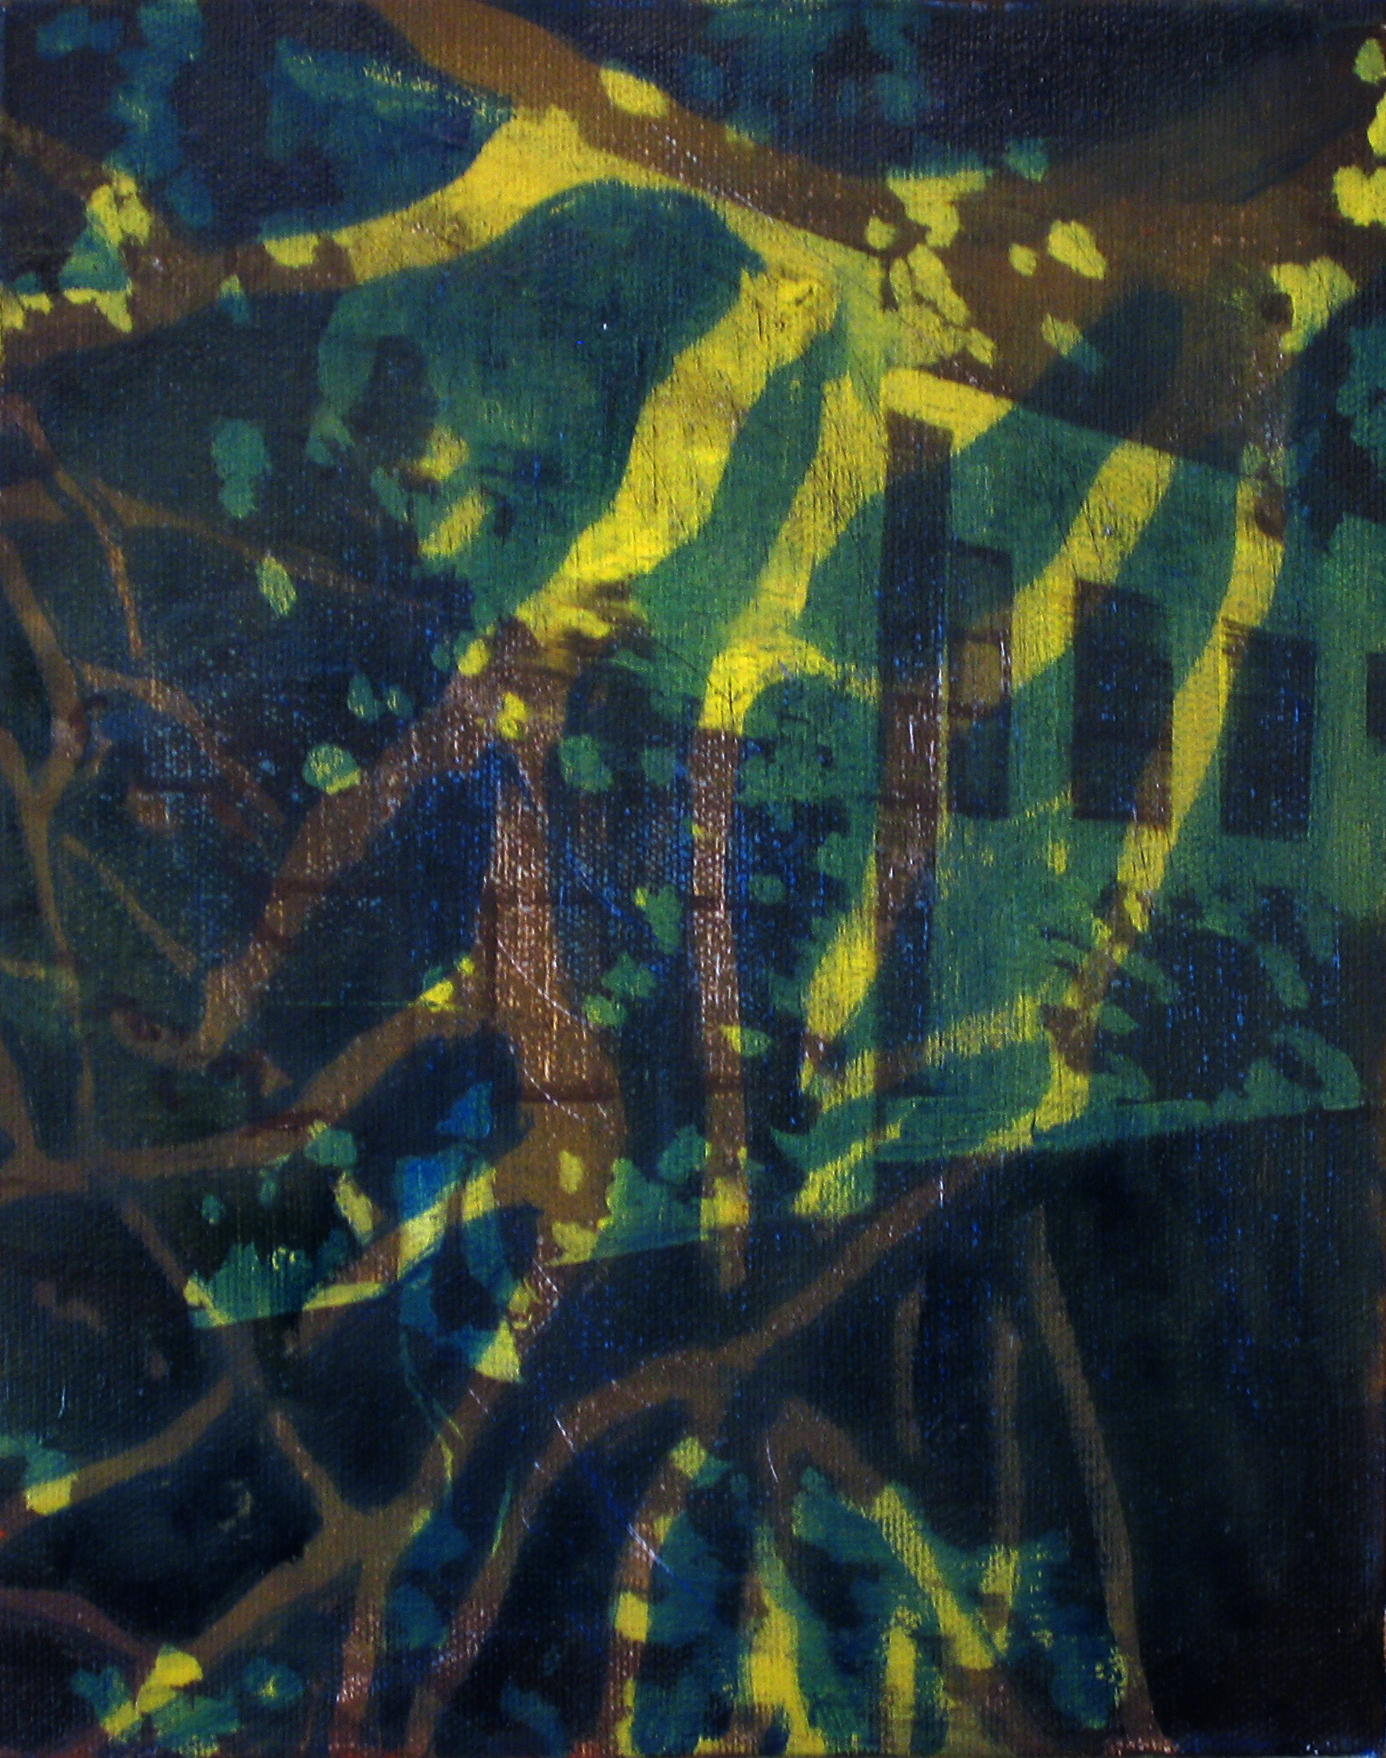   School Trees   10 x 8  Oil On Canvas  2010 